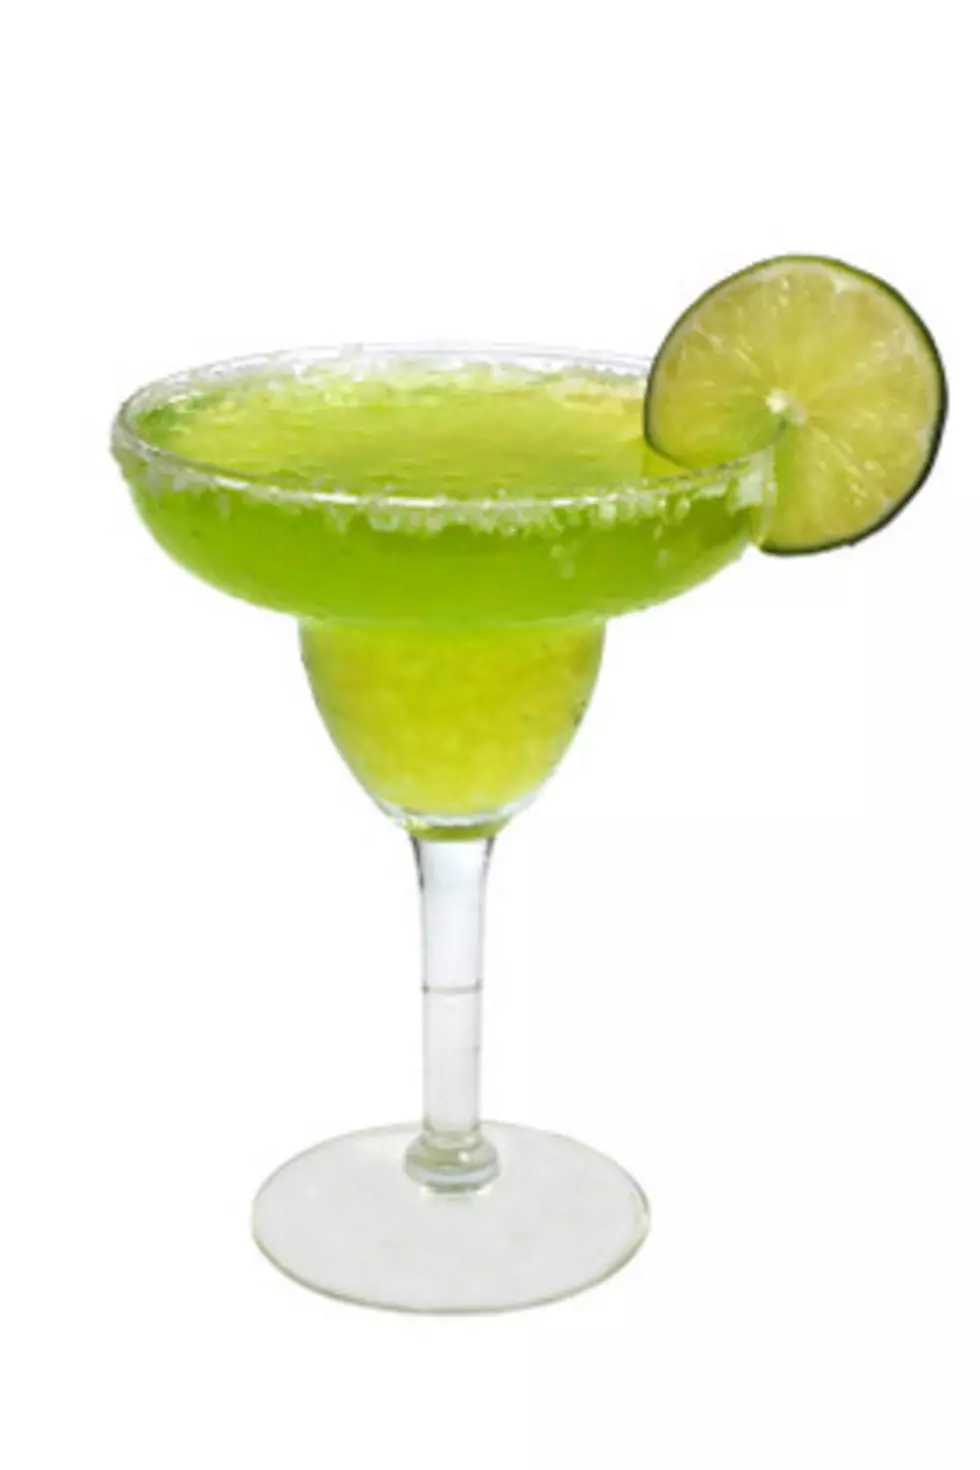 Slow Down + Enjoy A Cruzan Key Lime Pie Cocktail! [SPONSORED CONTENT]